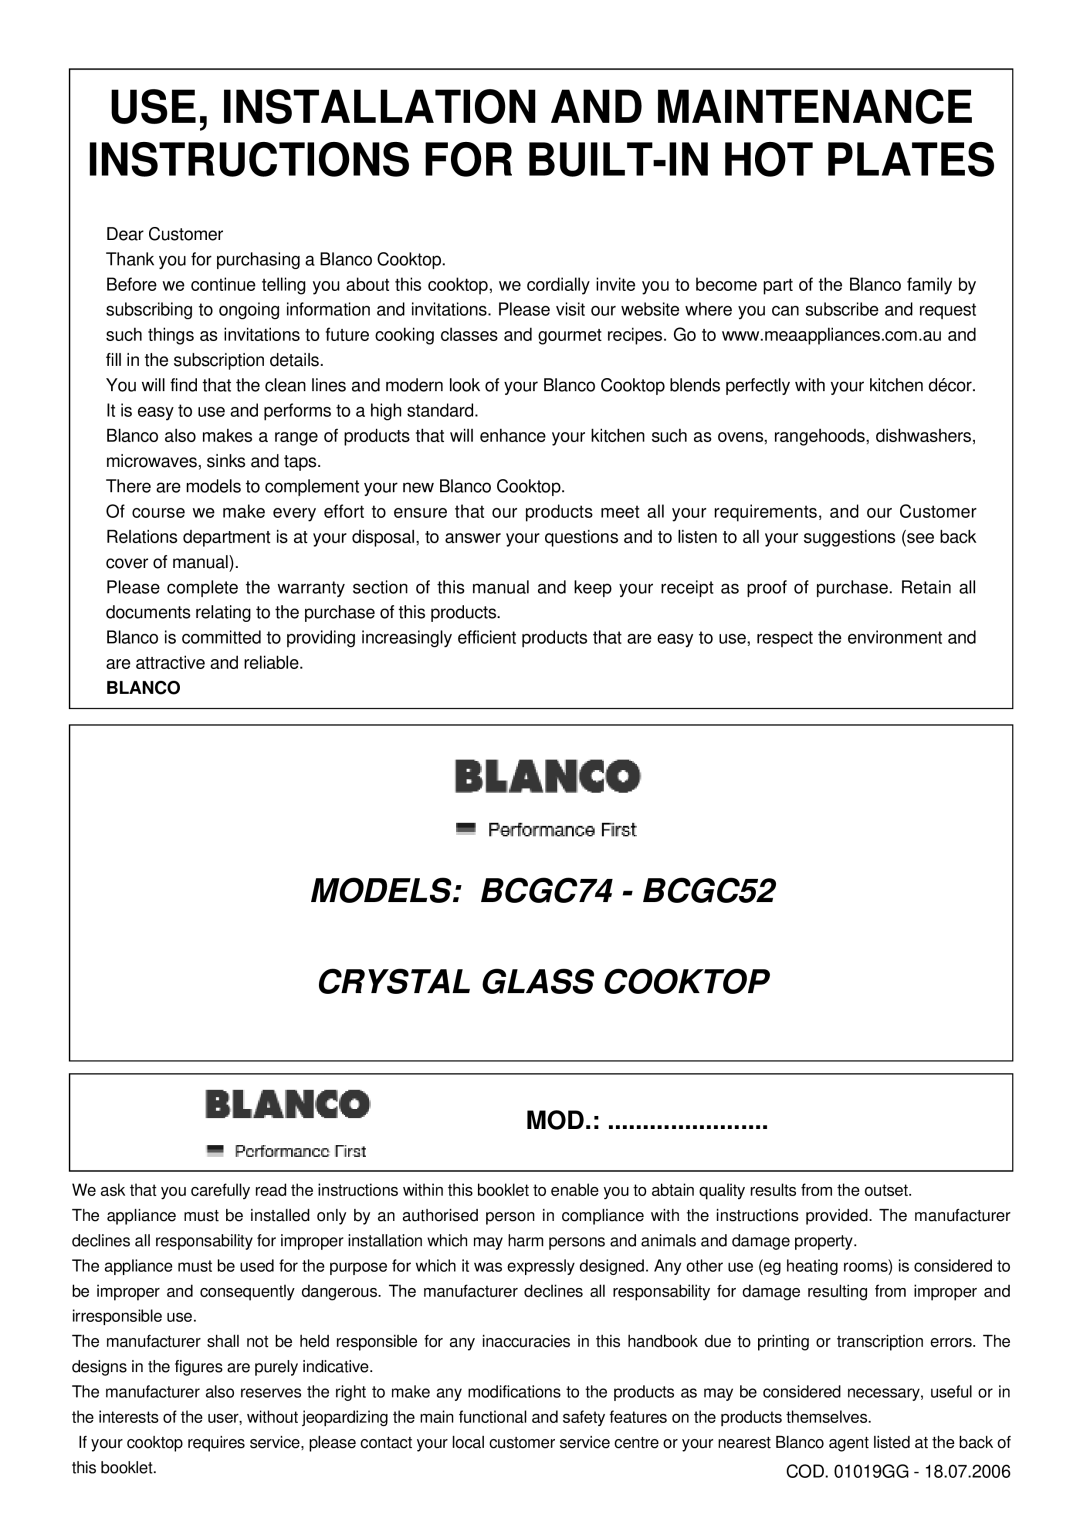 Blanco warranty MODELS BCGC74 - BCGC52 CRYSTAL GLASS COOKTOP, Blanco 